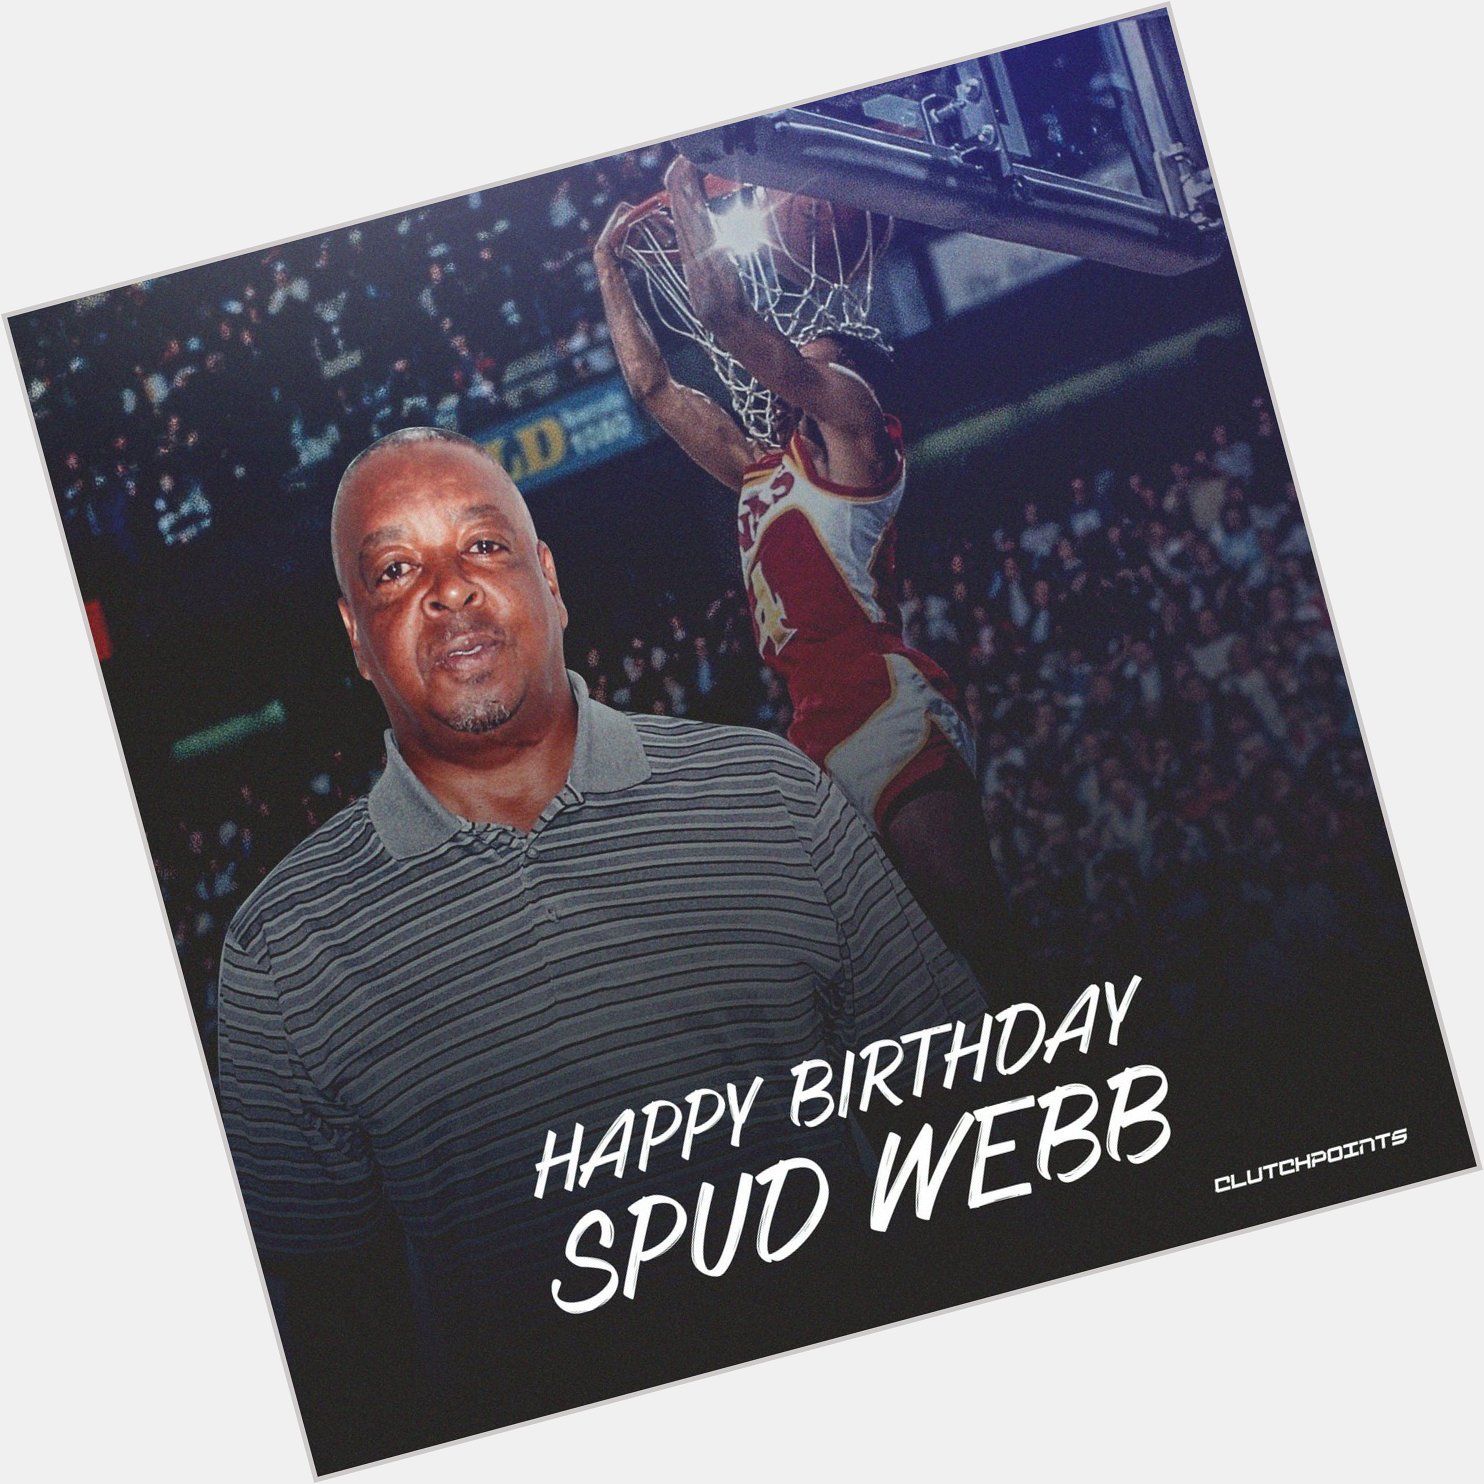 Happy 56th Birthday Spud Webb   